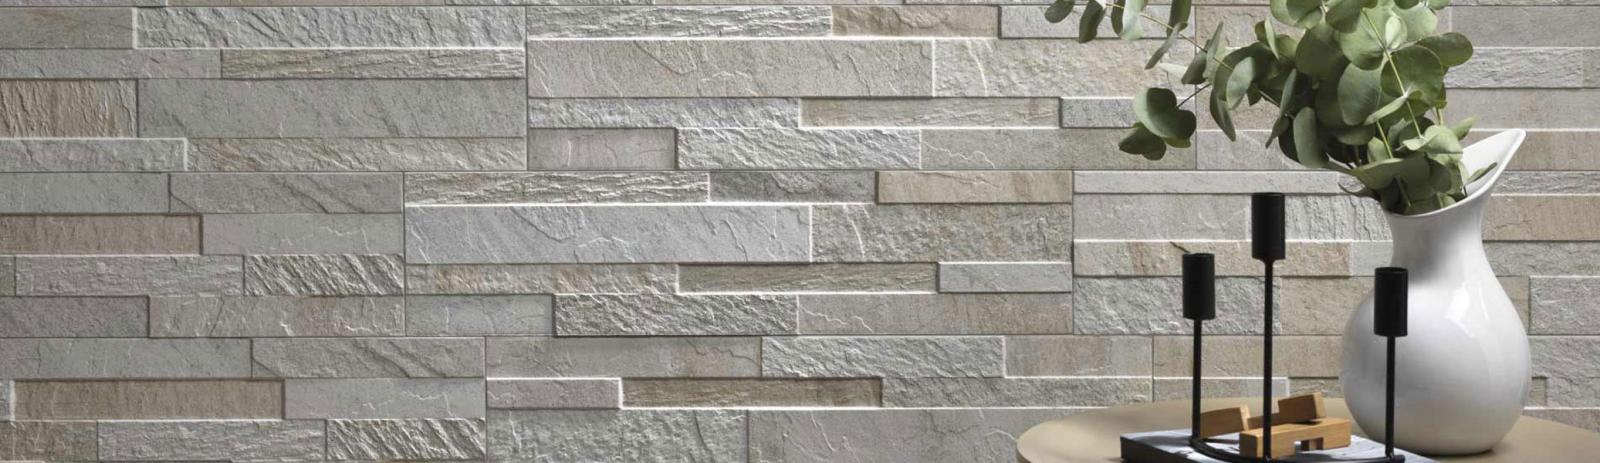 banner-cubics-3d-ledger-panel-wall-tile-ceramica-rondine-1900x550